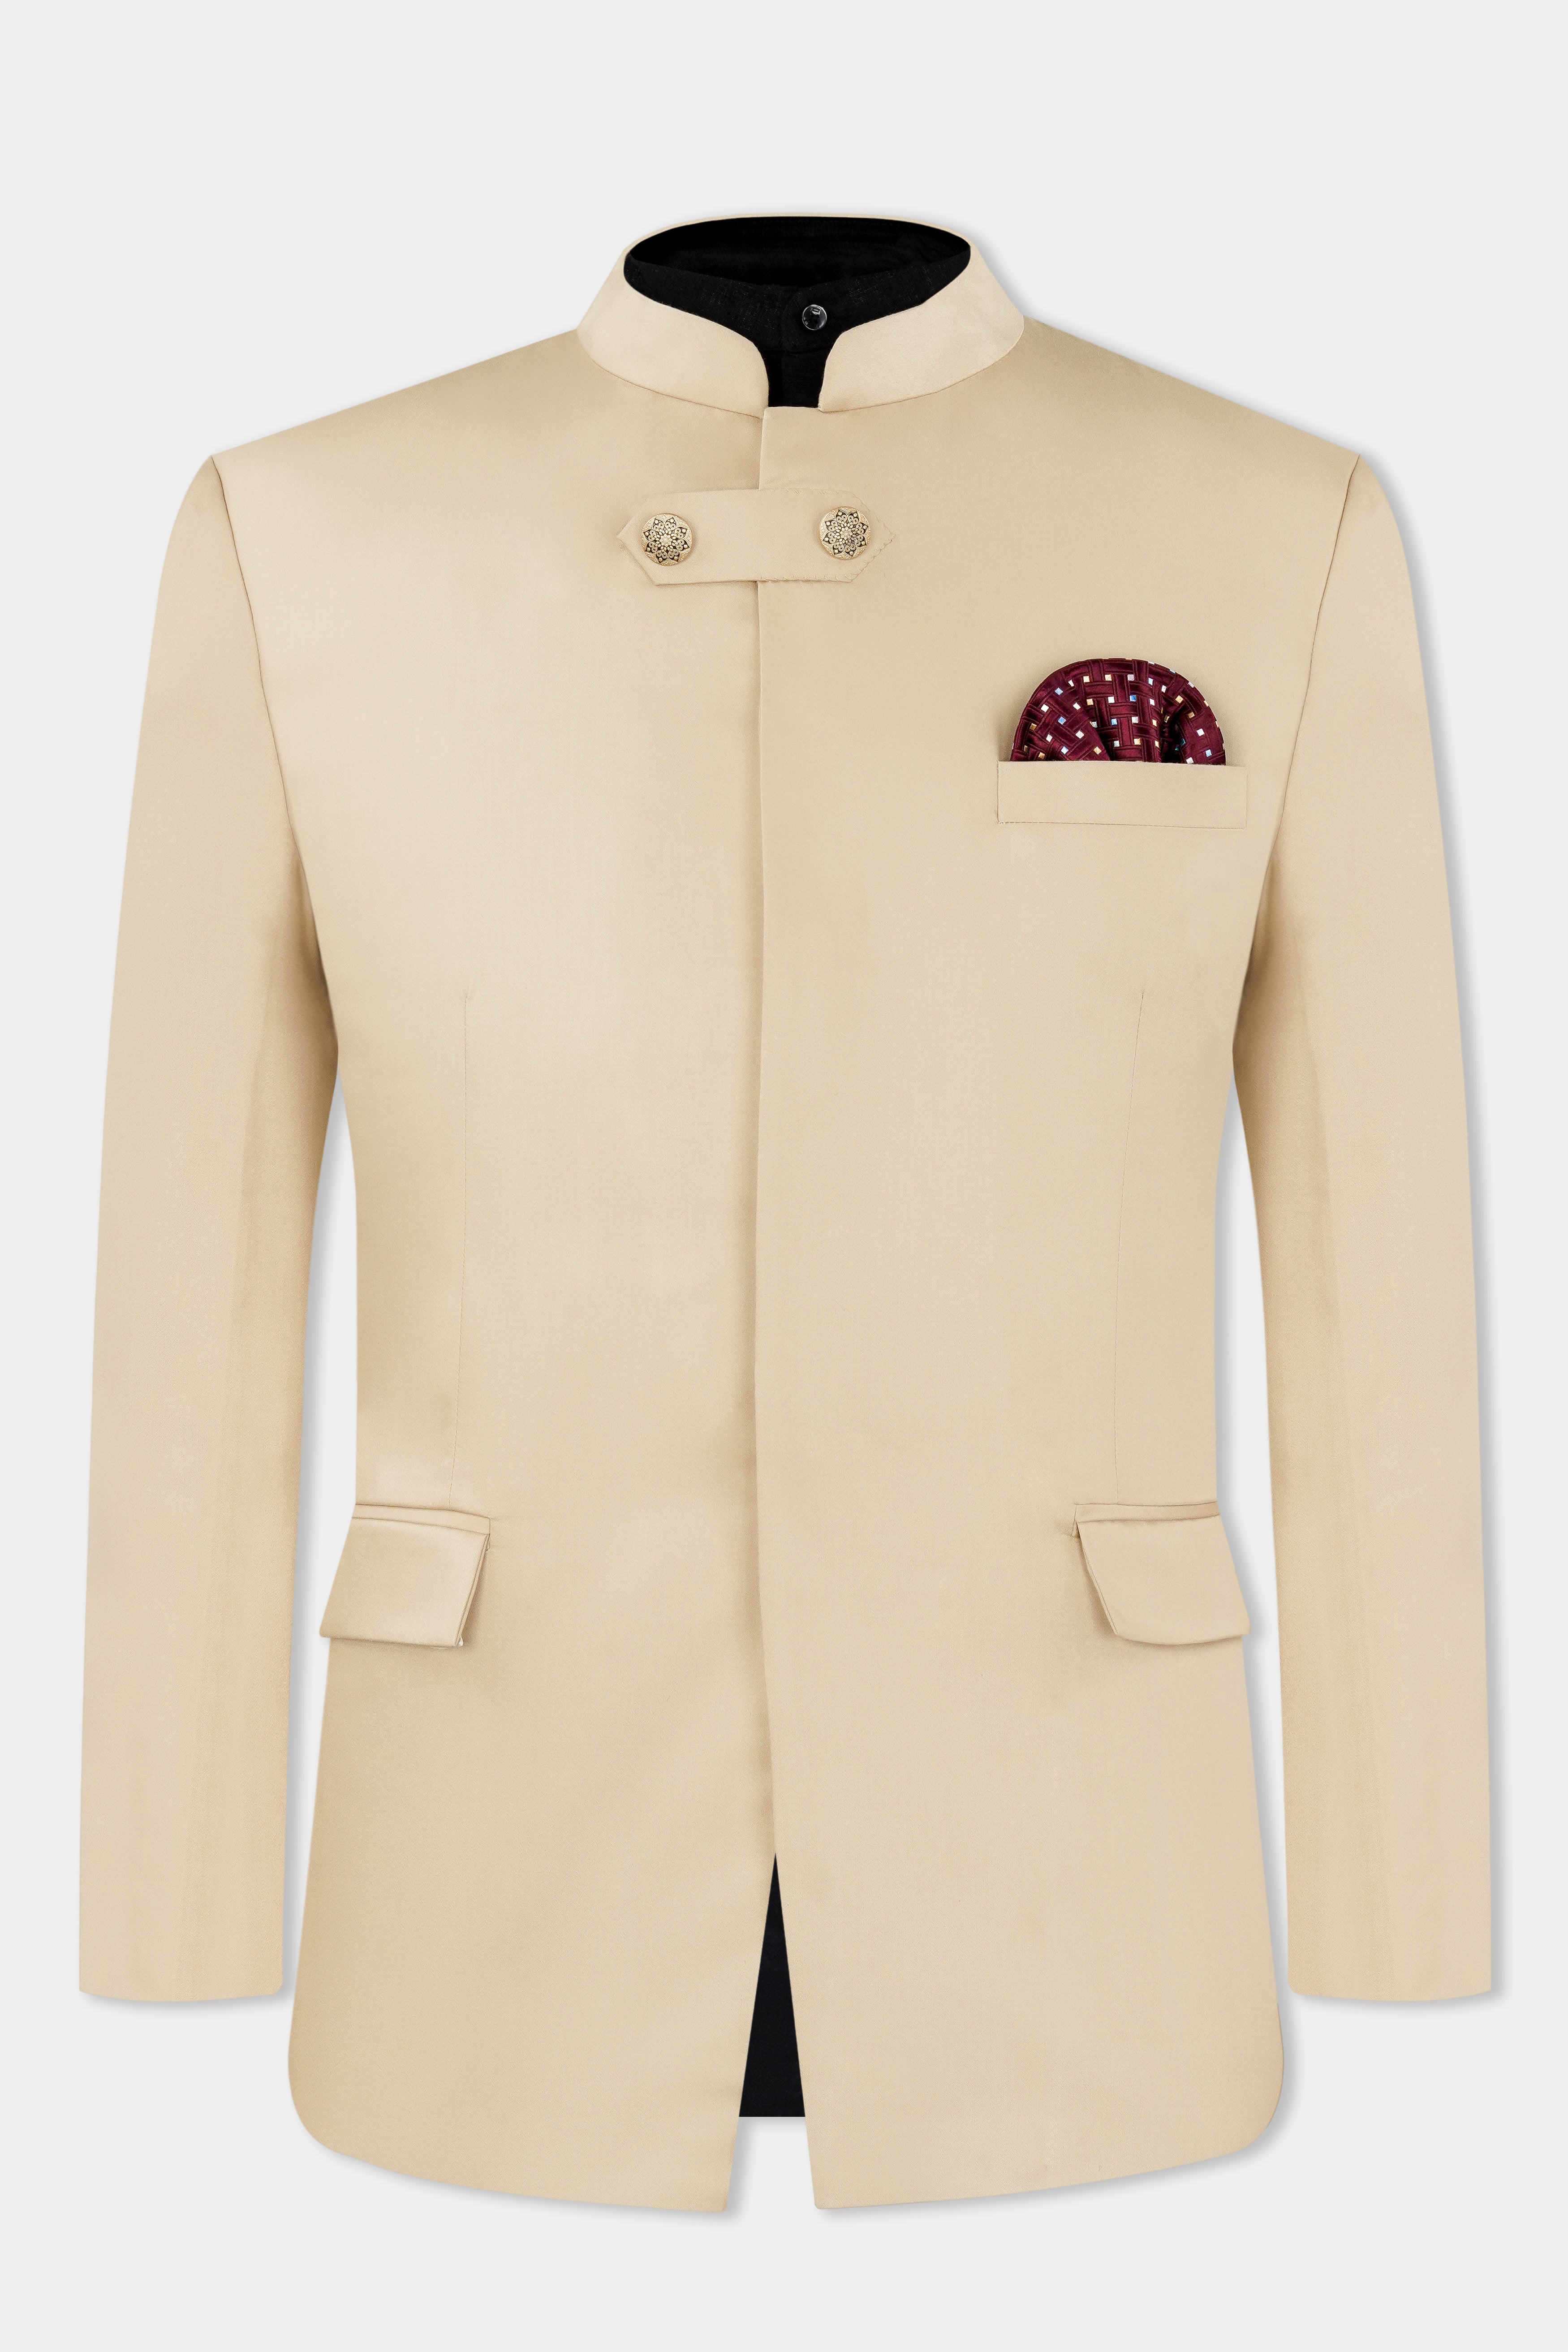 Jodhpuri Suit Maharaja Brown Bandhgala Suit Formal Wear Suit Sainly– SAINLY